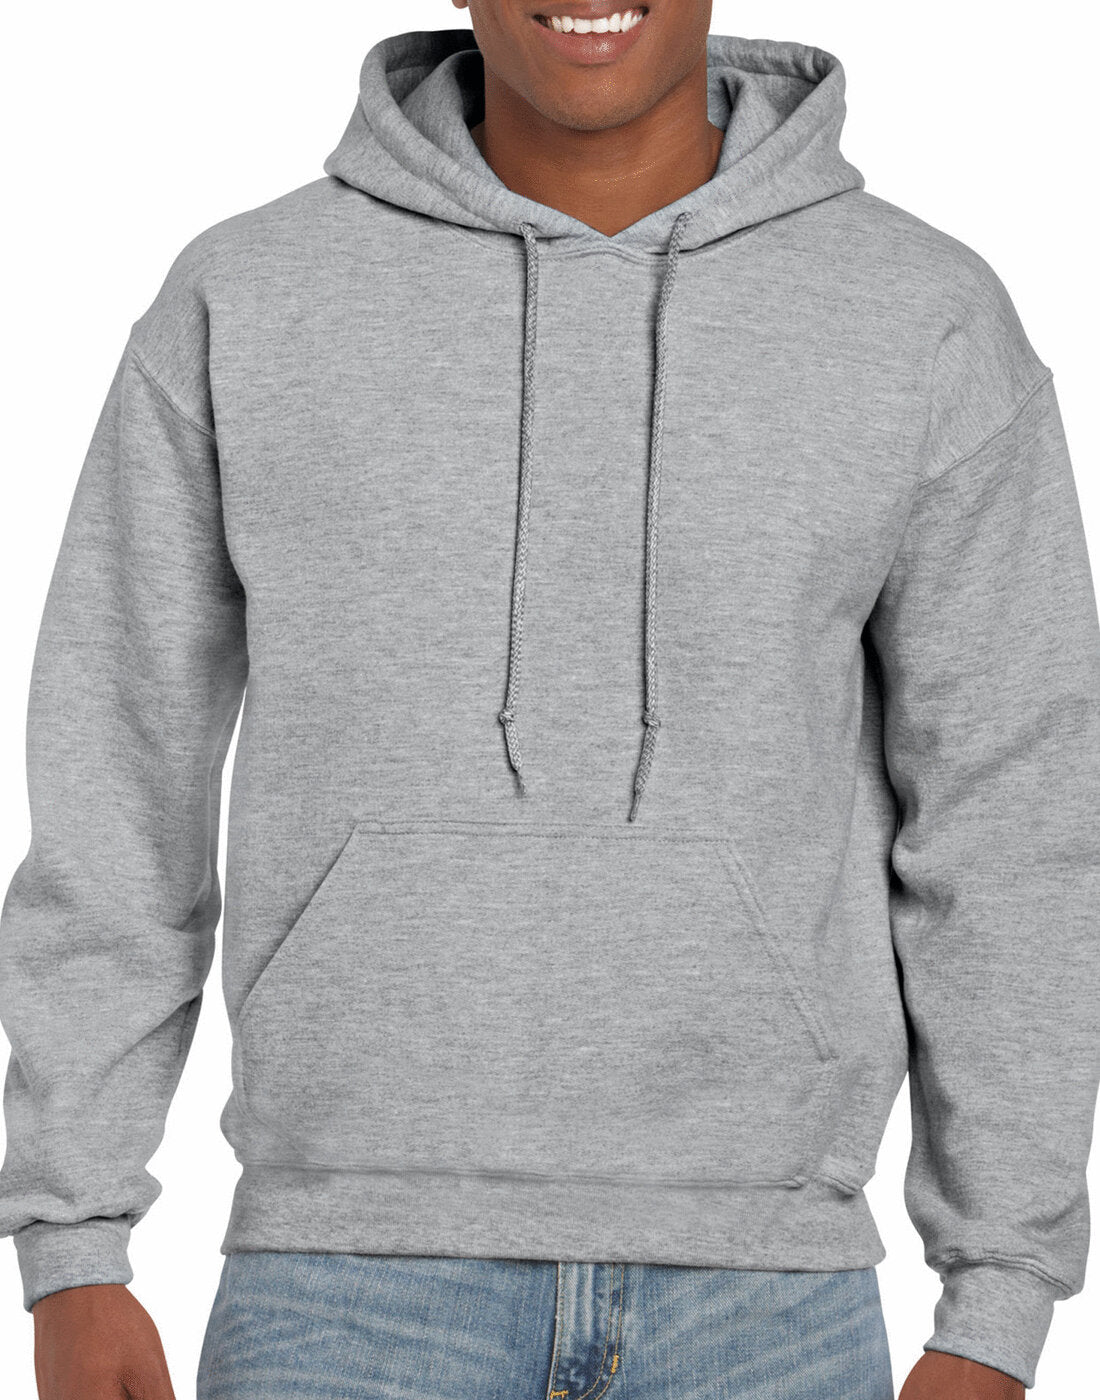 Gildan Dryblend Adult Hooded Sweatshirt - Sports Grey